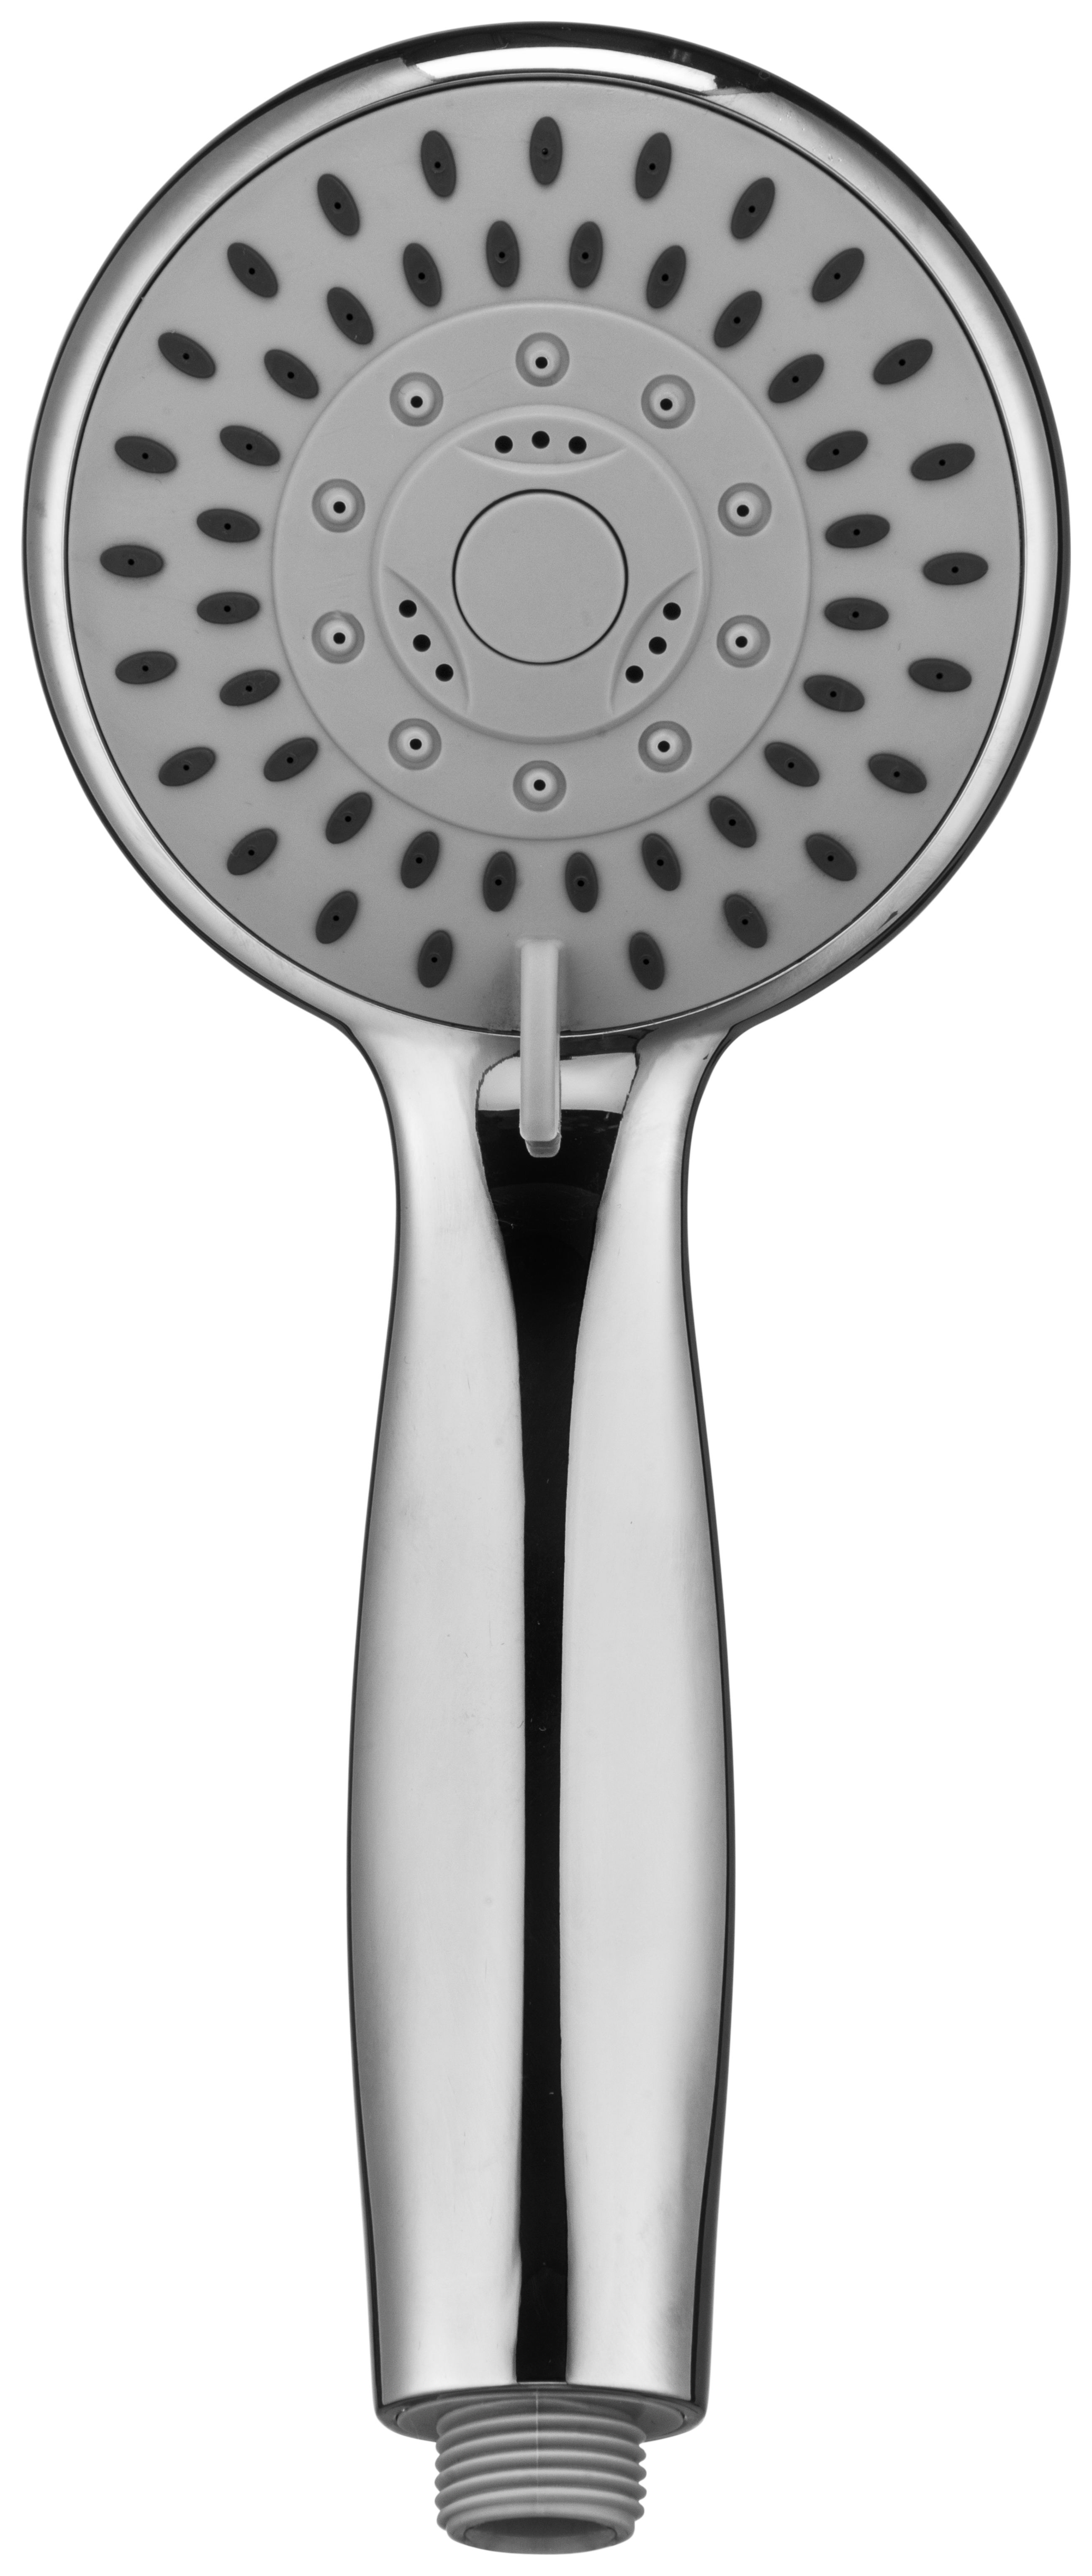 Image of Croydex Nero 5 Function Bathroom Shower Handset - Chrome